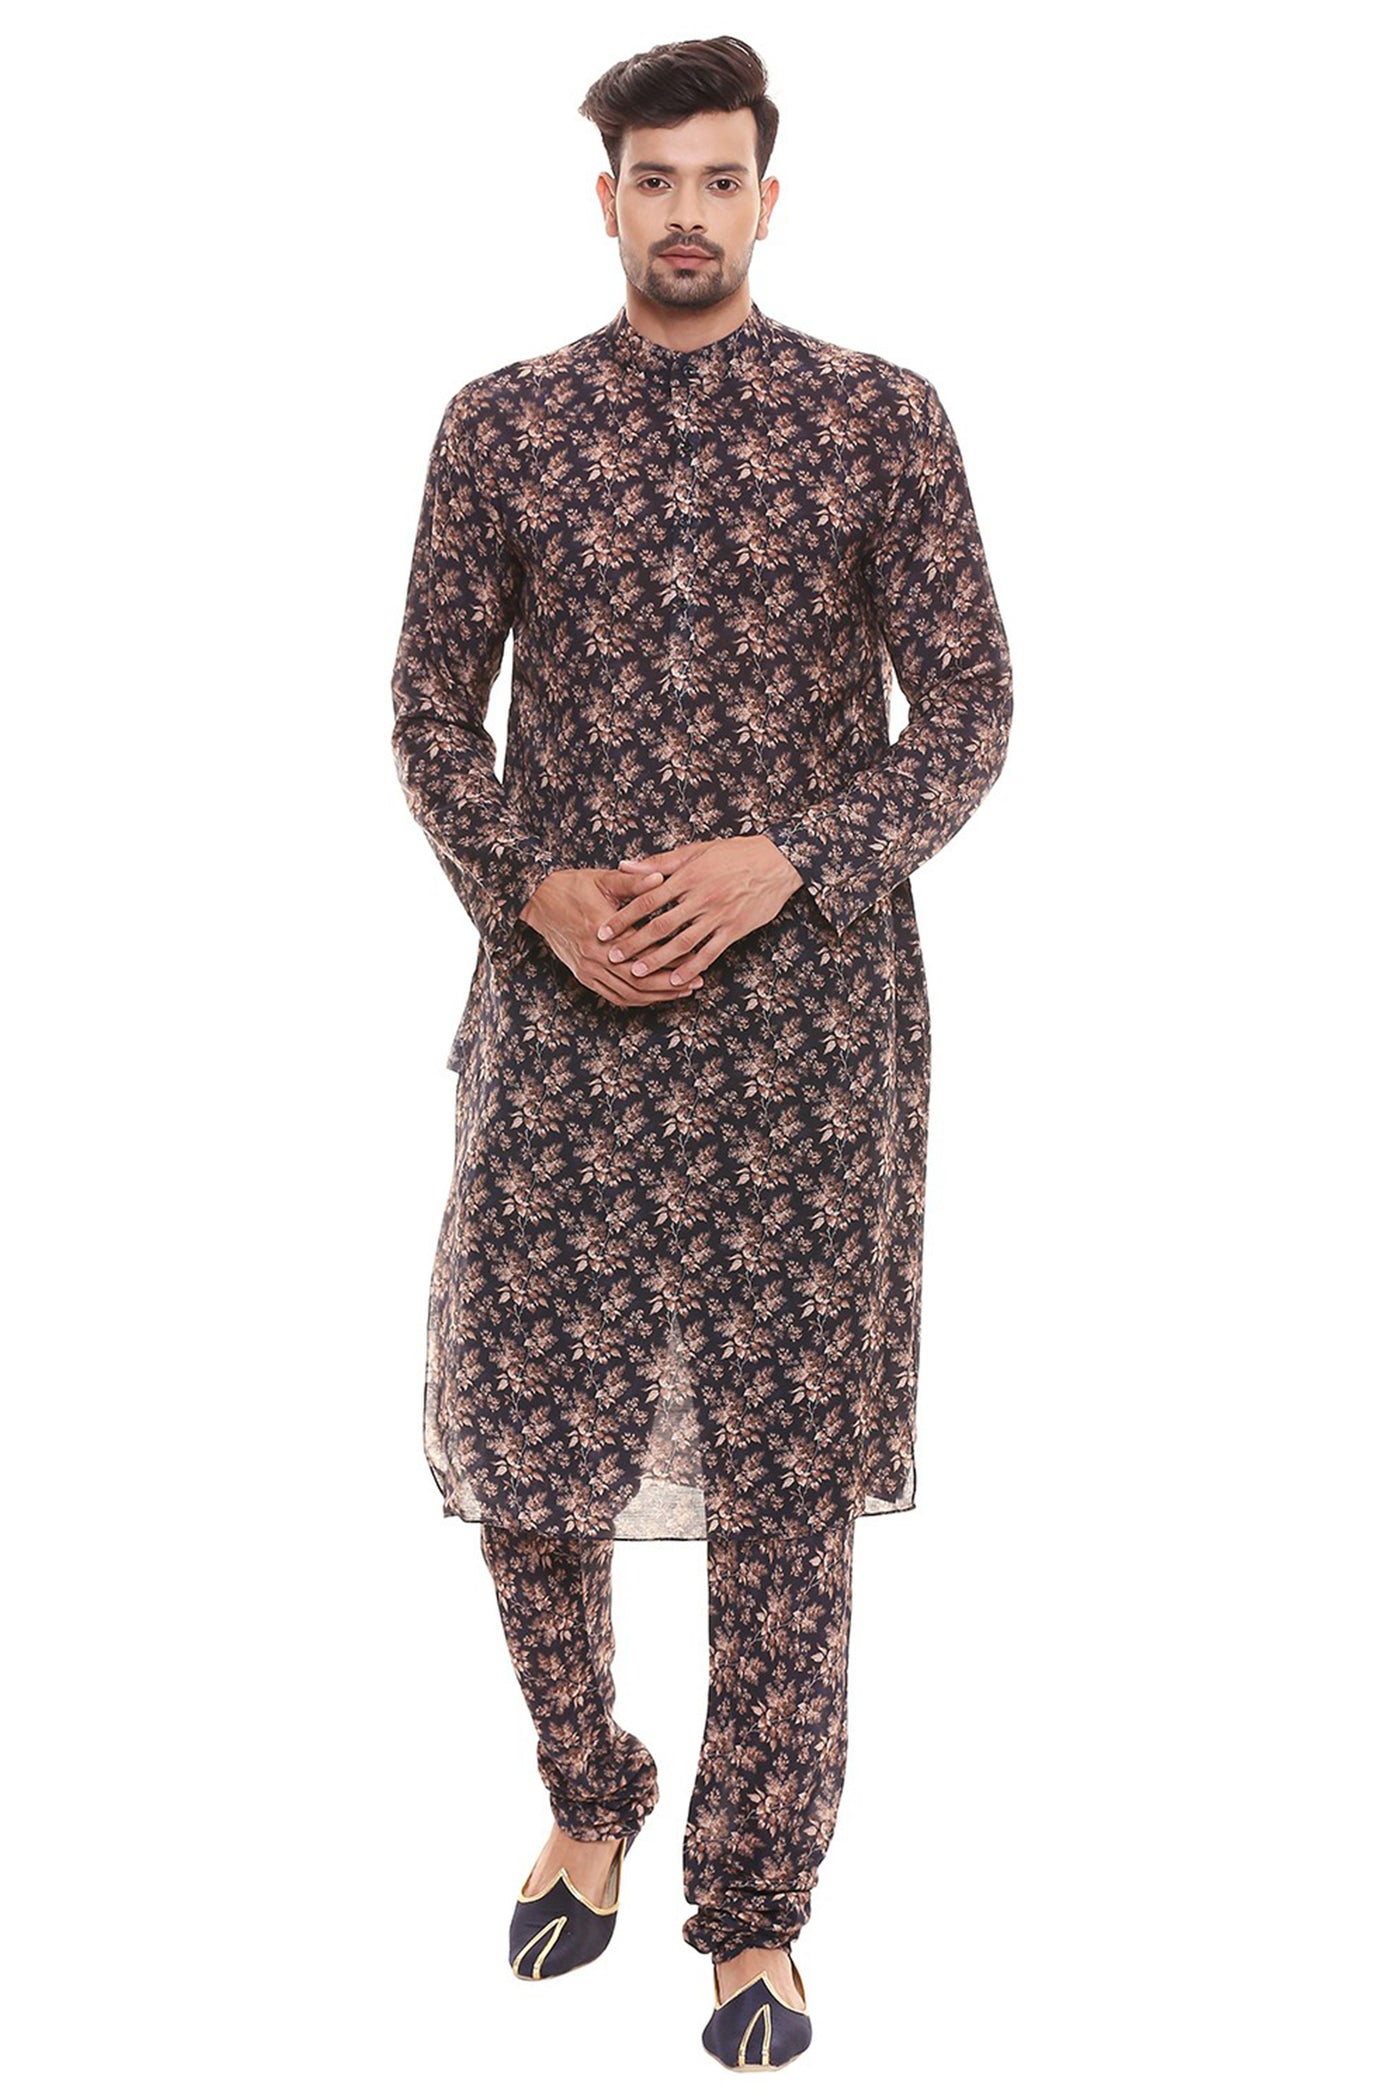 Sougat Paul menswear Printed Kurta And Churidar Paired With Quilted Sleeveless Jacket blue rust festive indian designer wear online shopping melange singapore